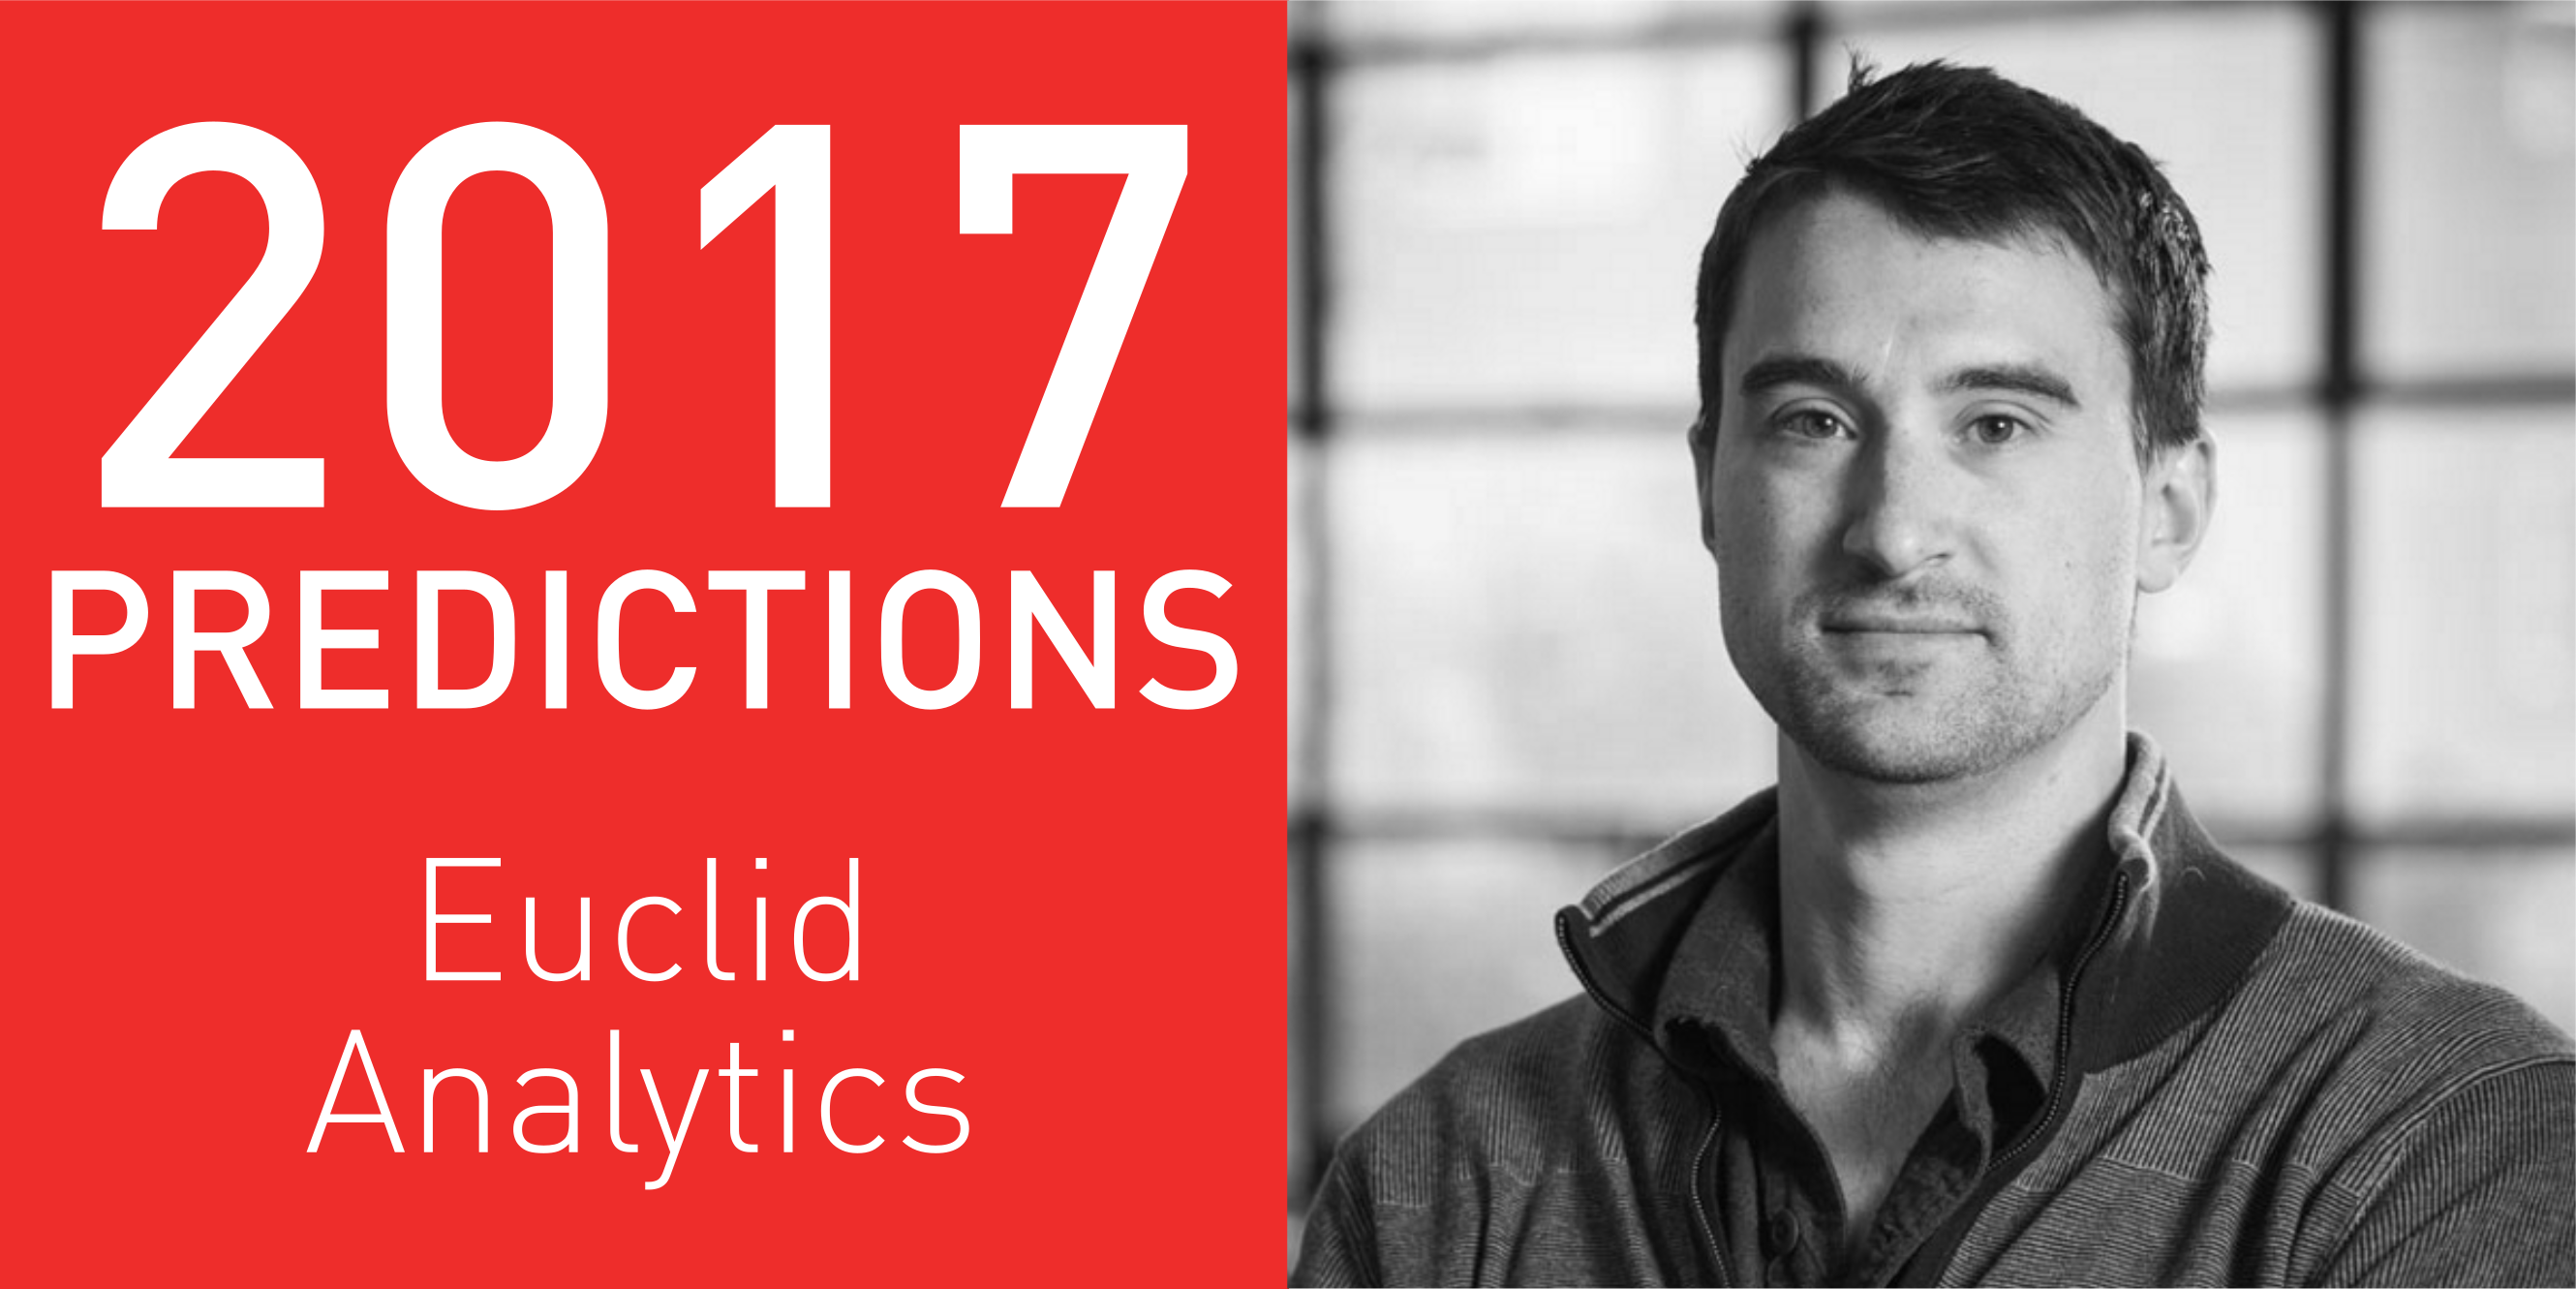 2017 predictions Euclid Analytics